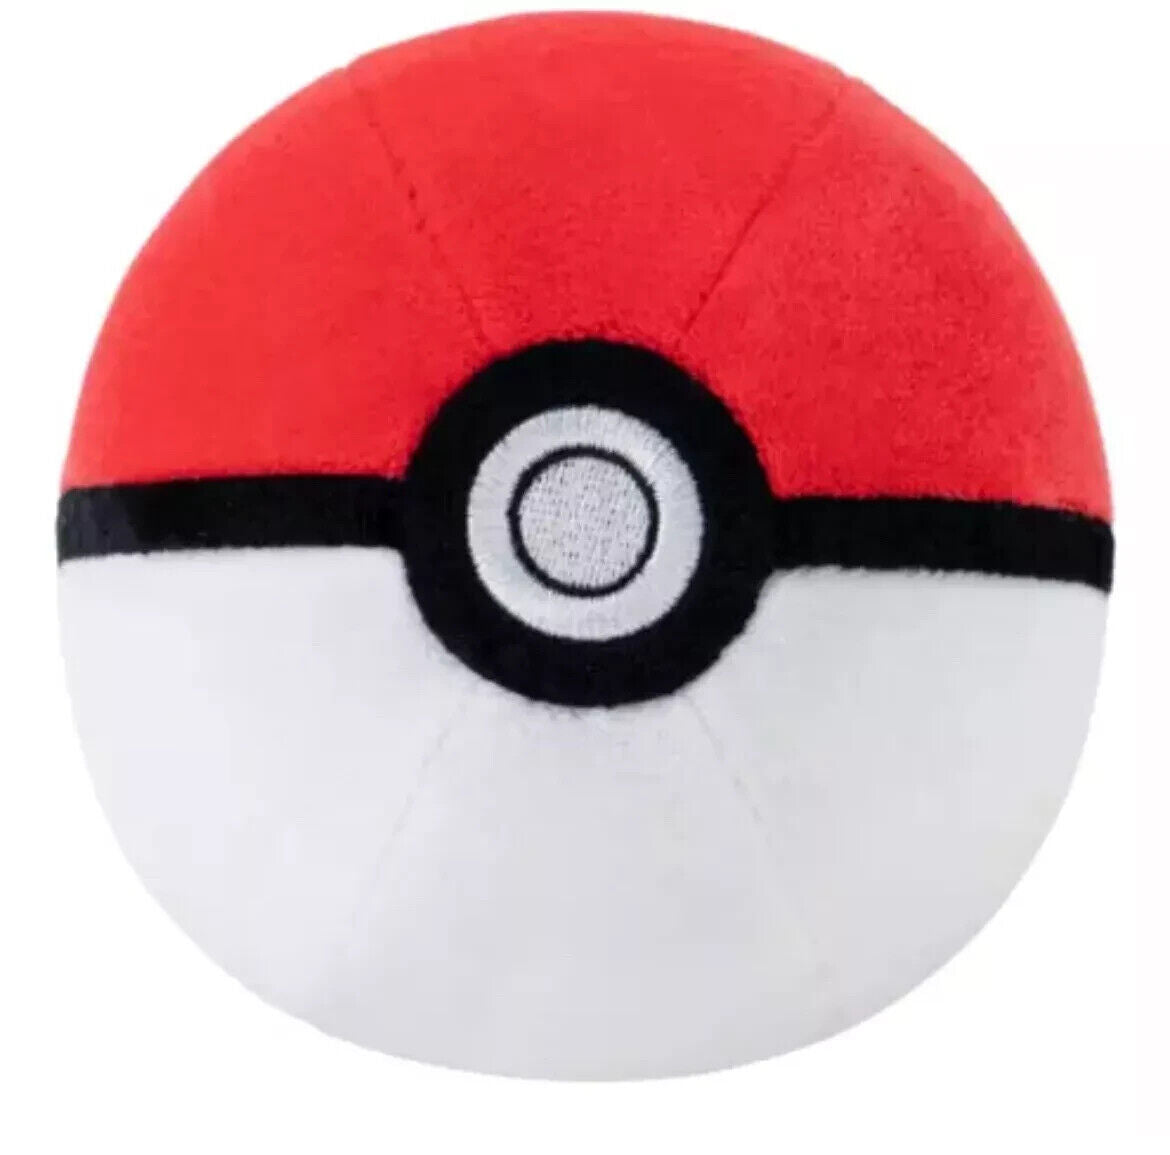 Pokémon 4" Poké Ball Plush Standard Poke Ball (10cm) - NEW With Tags